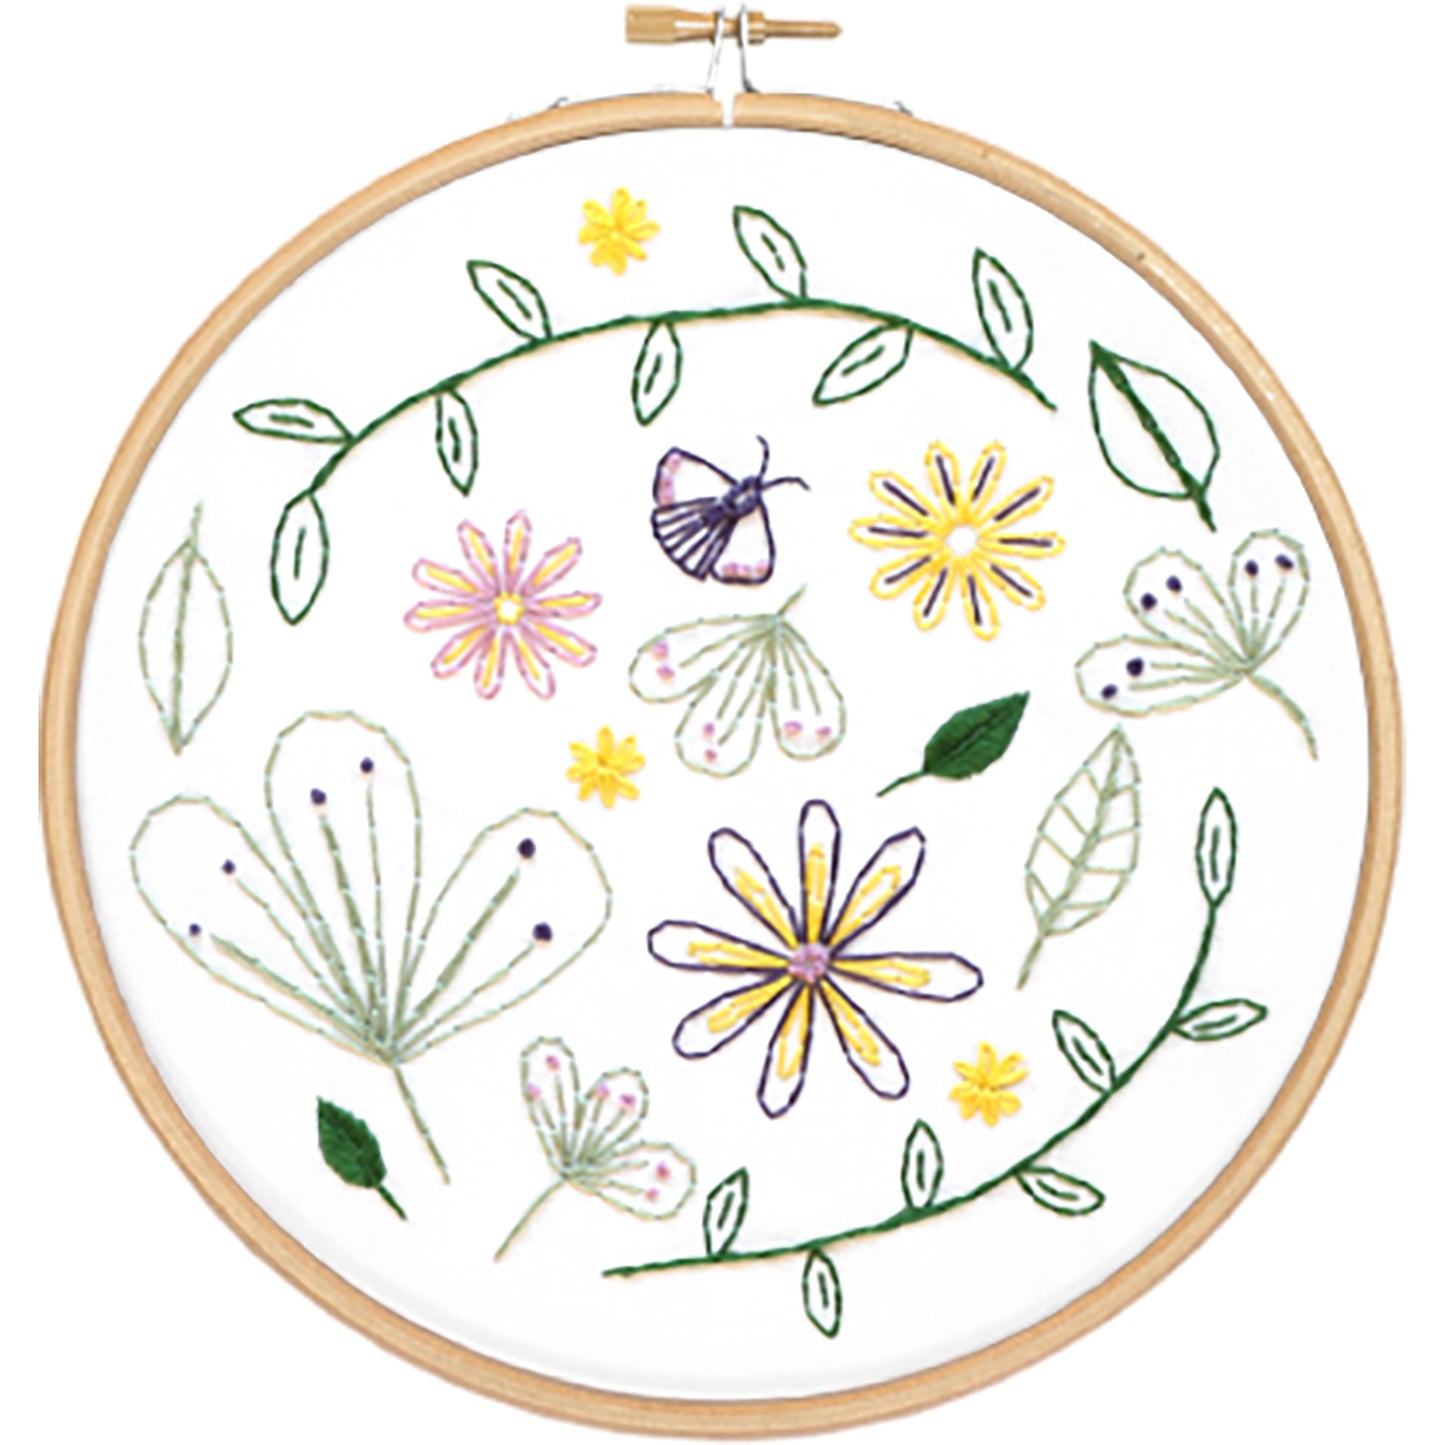 Wildflower Meadow Embroidery Kit Alternative View #1